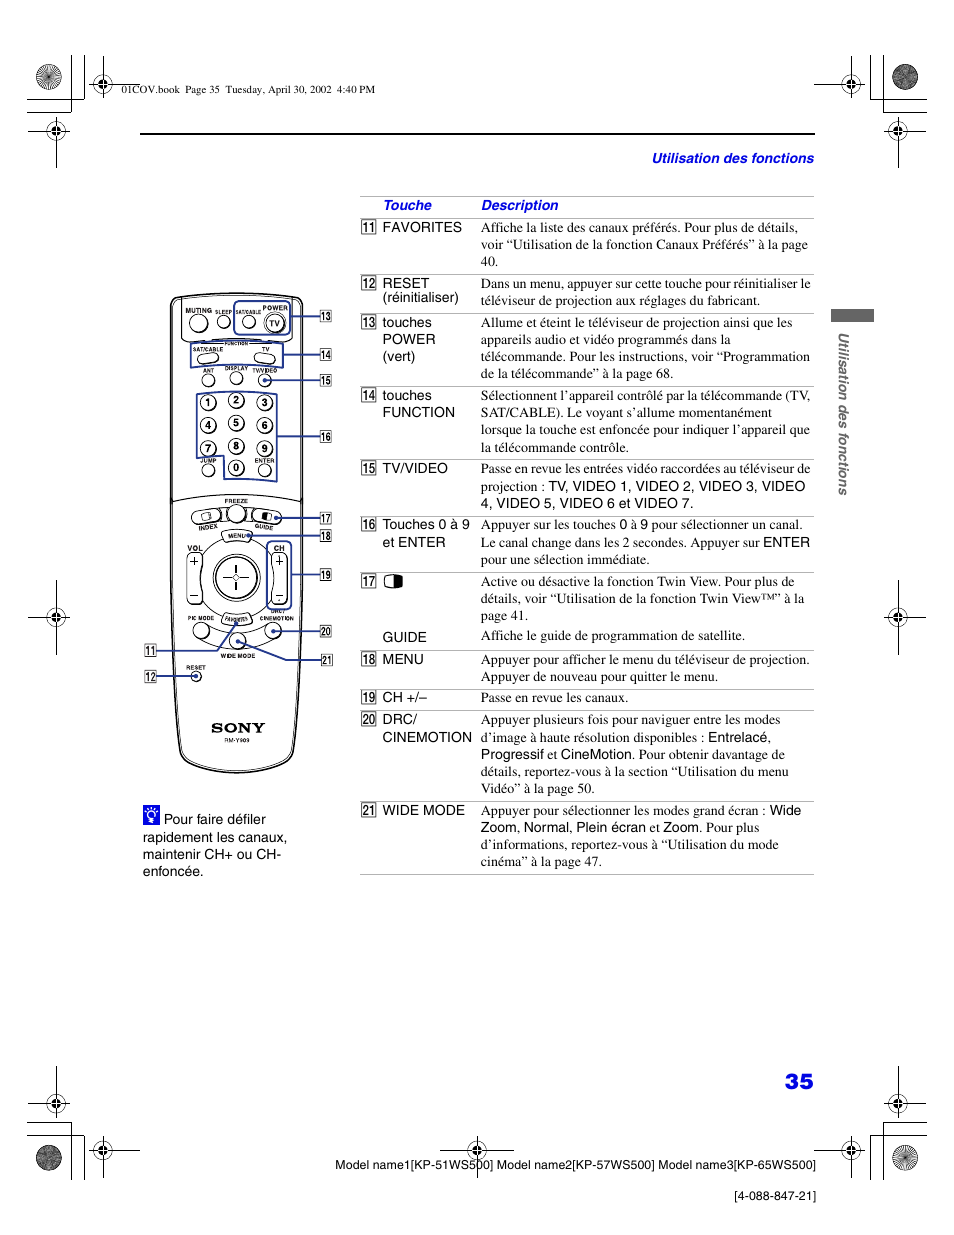 Sony KP 65WS500 Manuel d'utilisation | Page 119 / 172